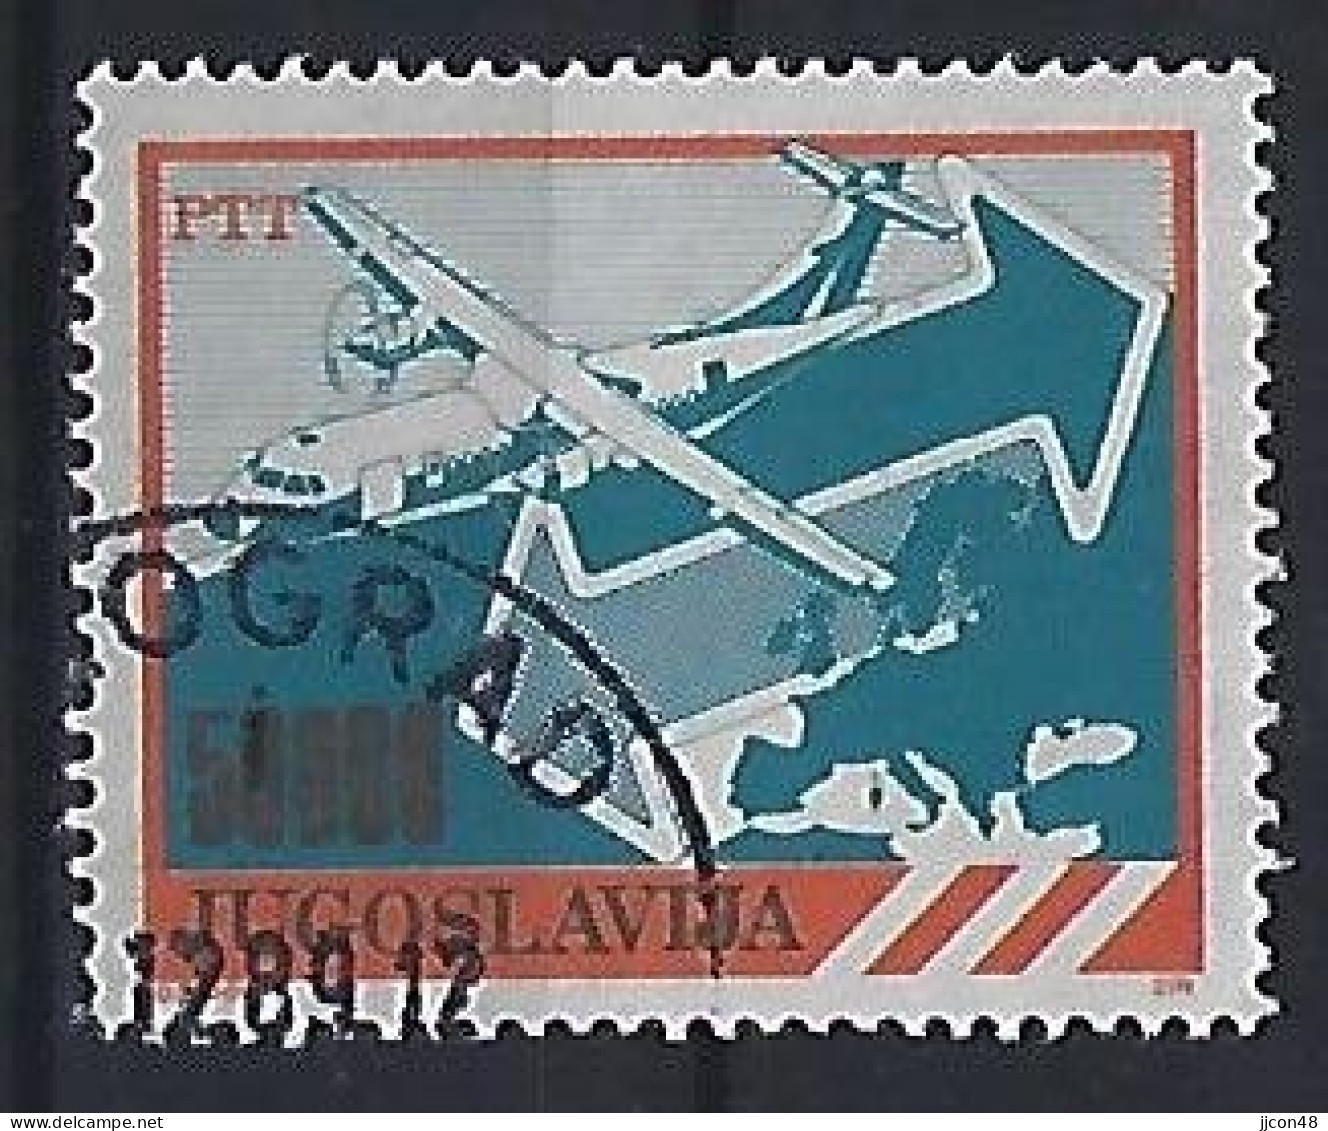 Jugoslavia 1989  Postdienst (o) Mi.2384 - Used Stamps